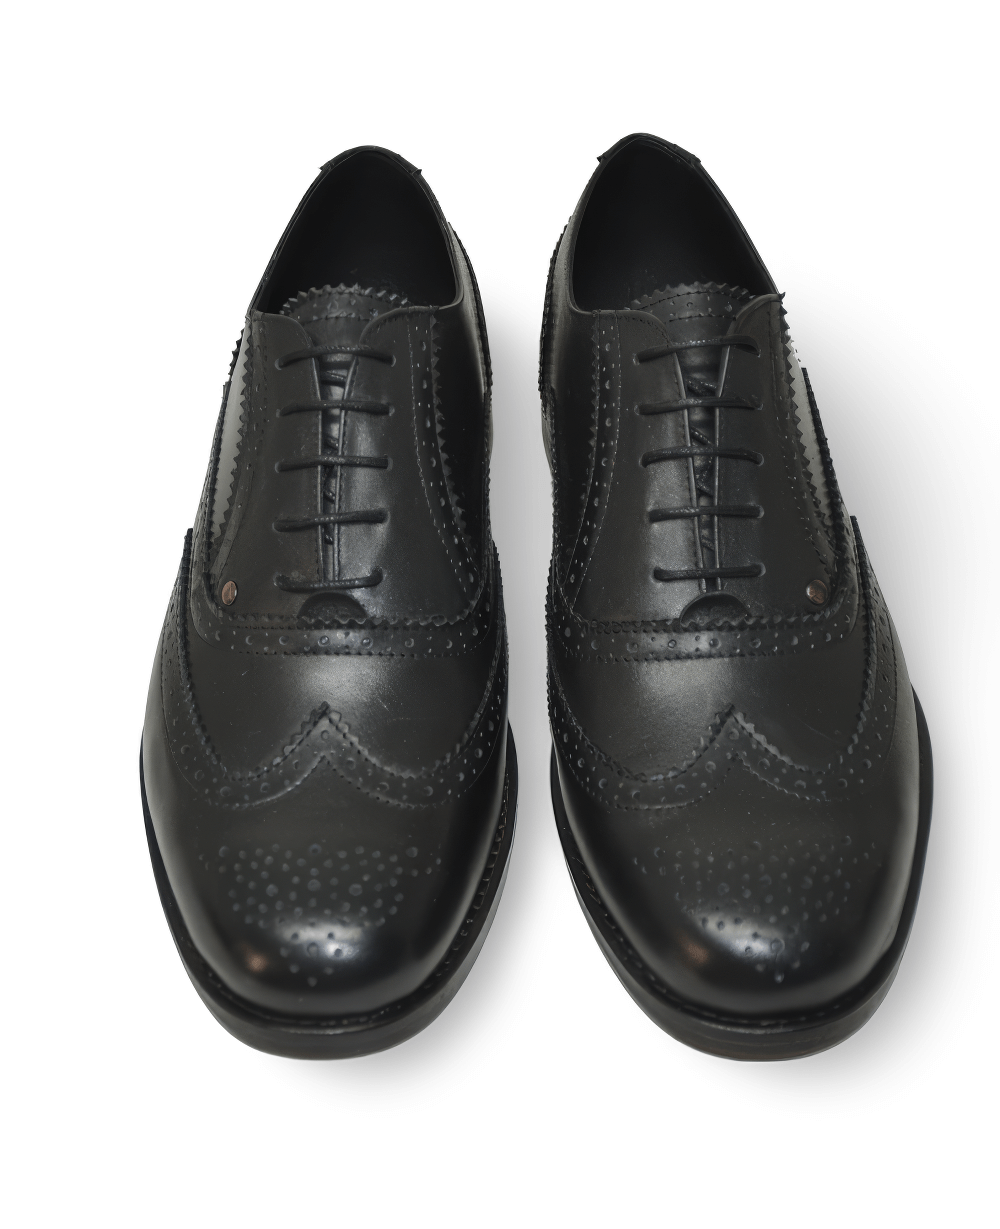 Elegant Flat Black Lace-Up Oxford Shoes for Men